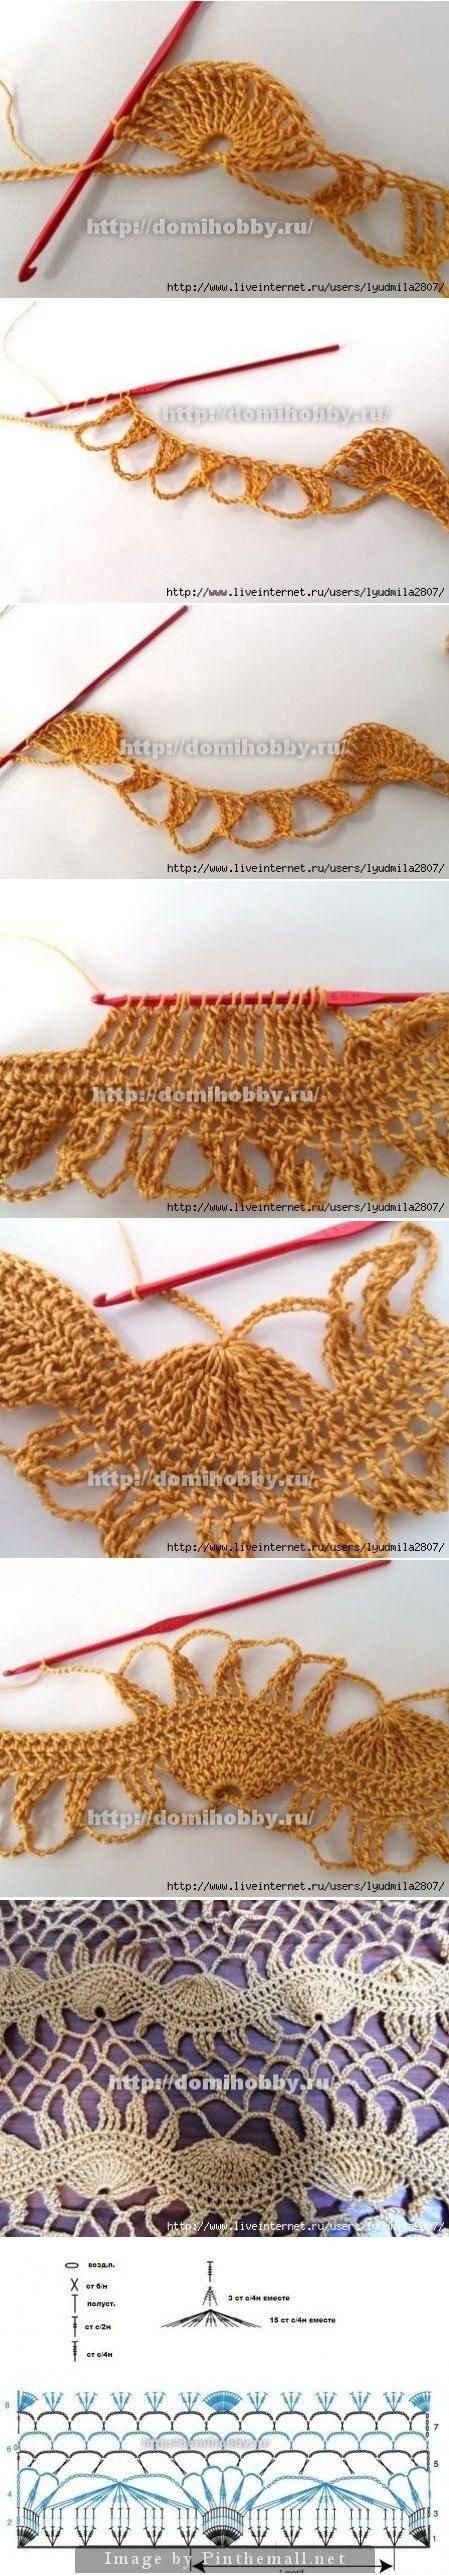 Awesome crochet technique looks like broomstick la...